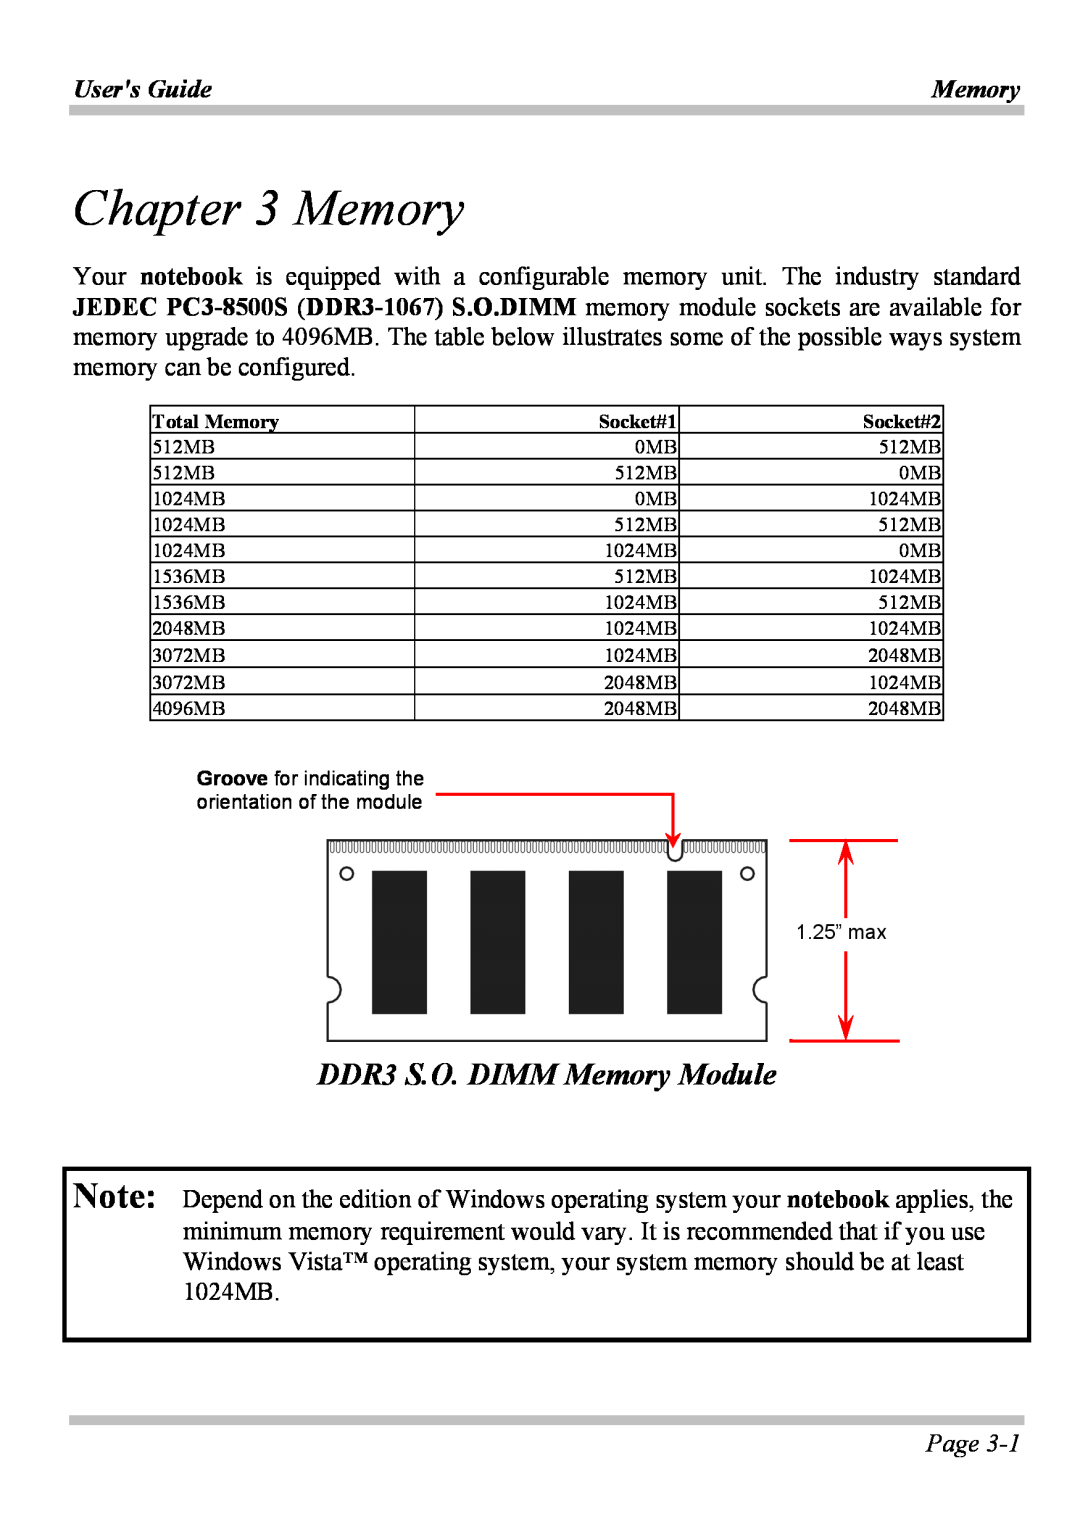 Microsoft W840DI manual DDR3 S.O. DIMM Memory Module, Users Guide, Page 